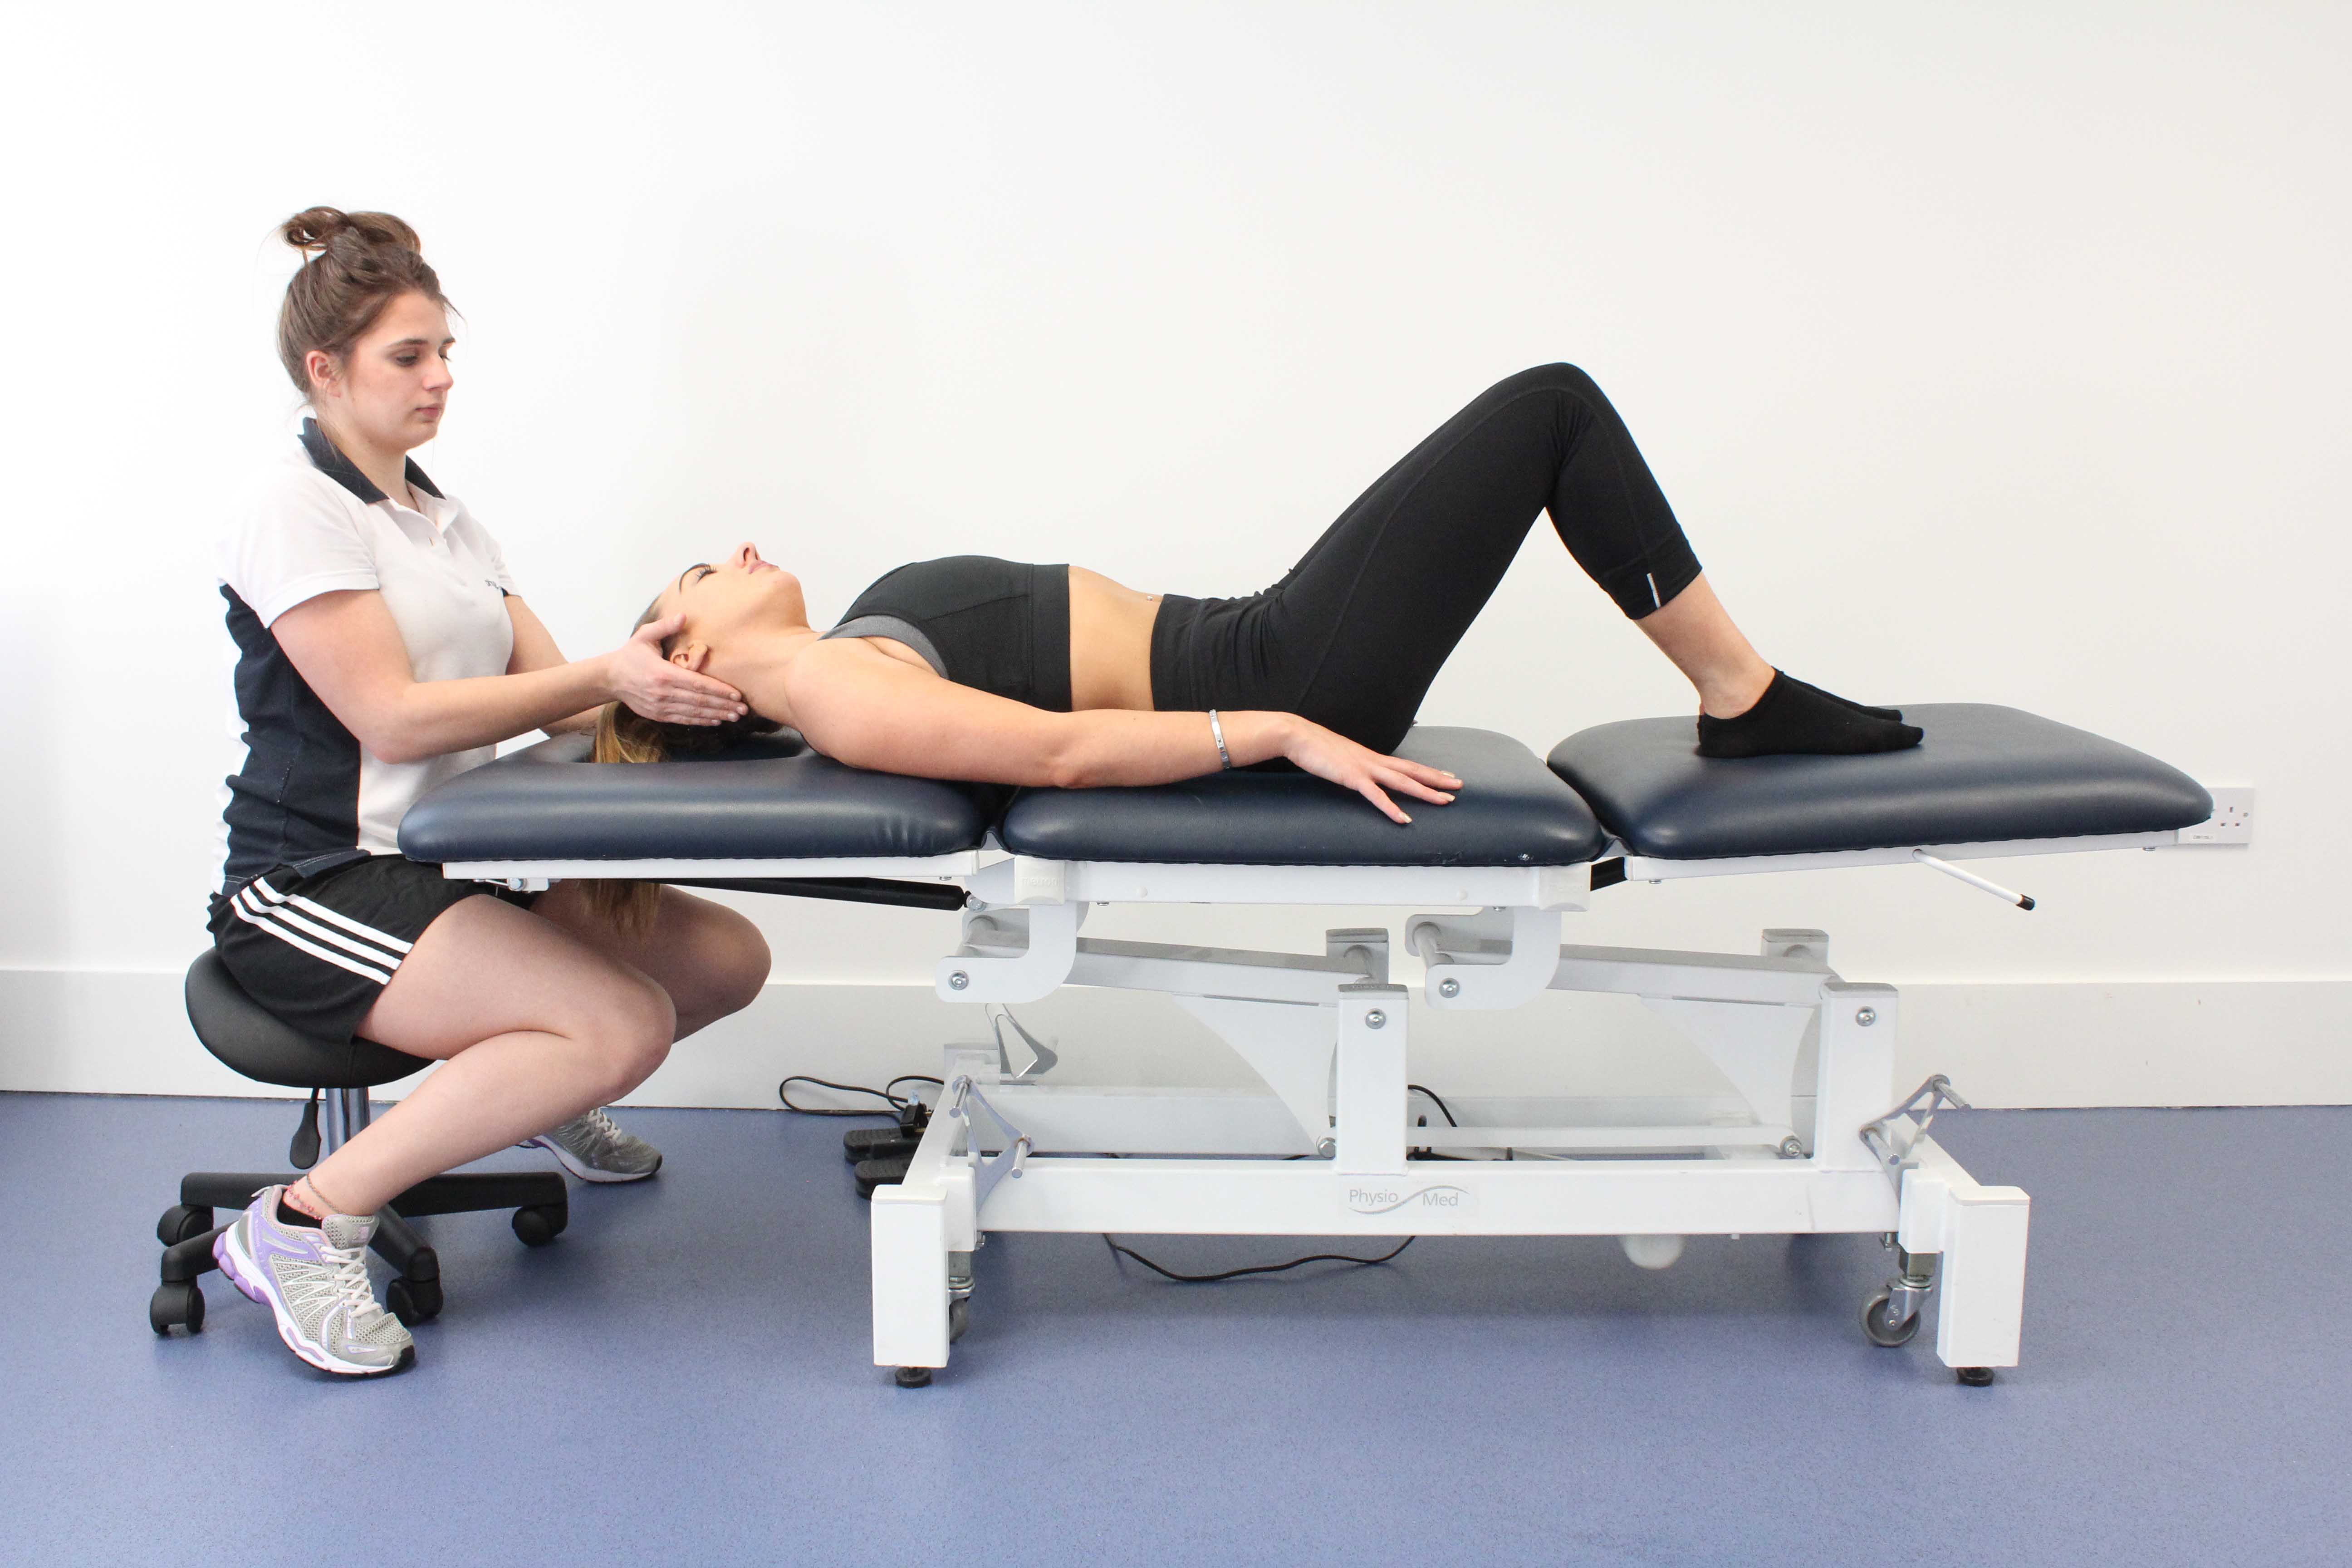 Vestibular rehabilitation exercises conducted by a specialist physiotherapist